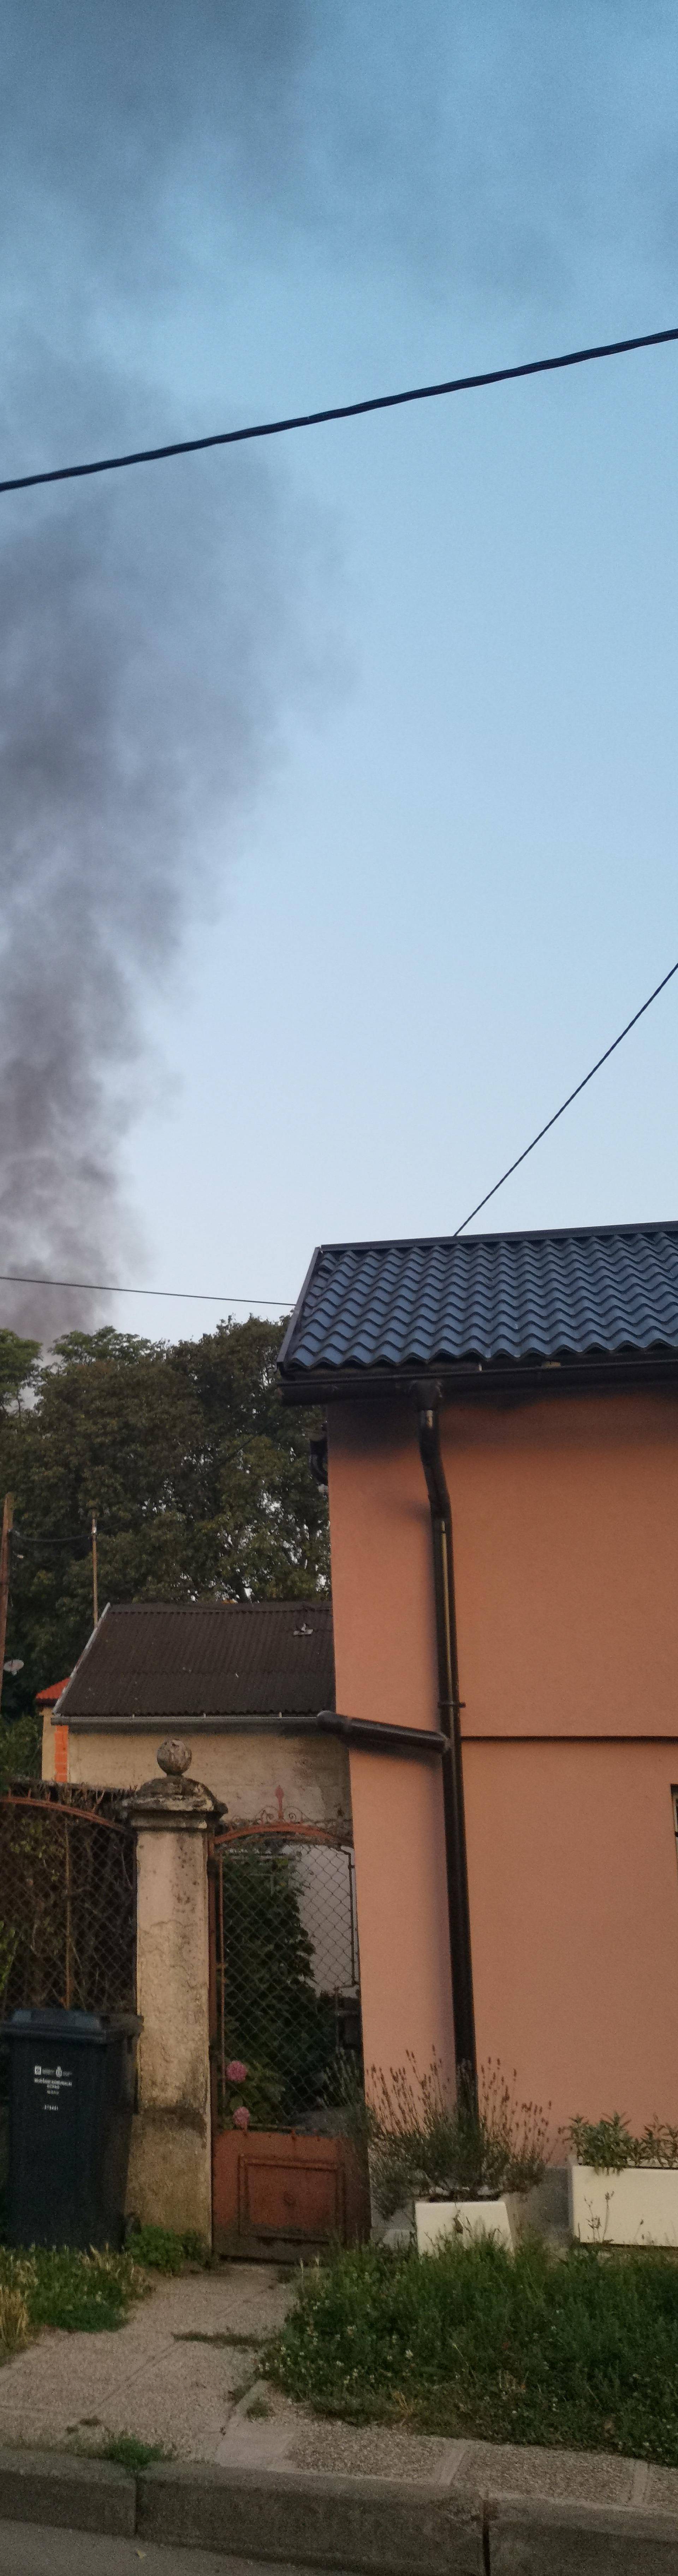 Požar u Zagrebu: Zapalila se napuštena kuća na Trešnjevci